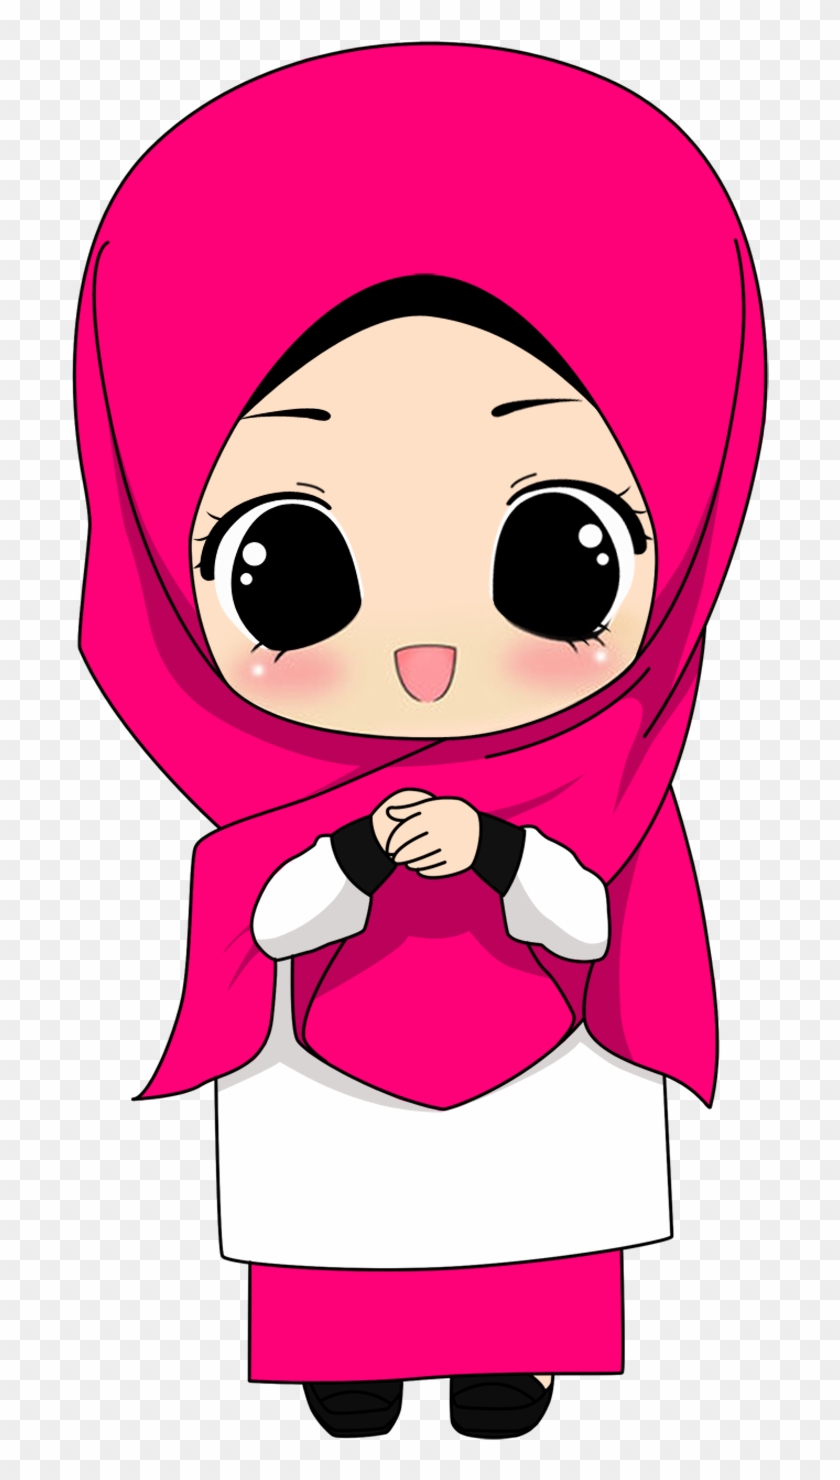 wallpaper kartun muslimah,cartoon,pink,clip art,illustration,fictional character